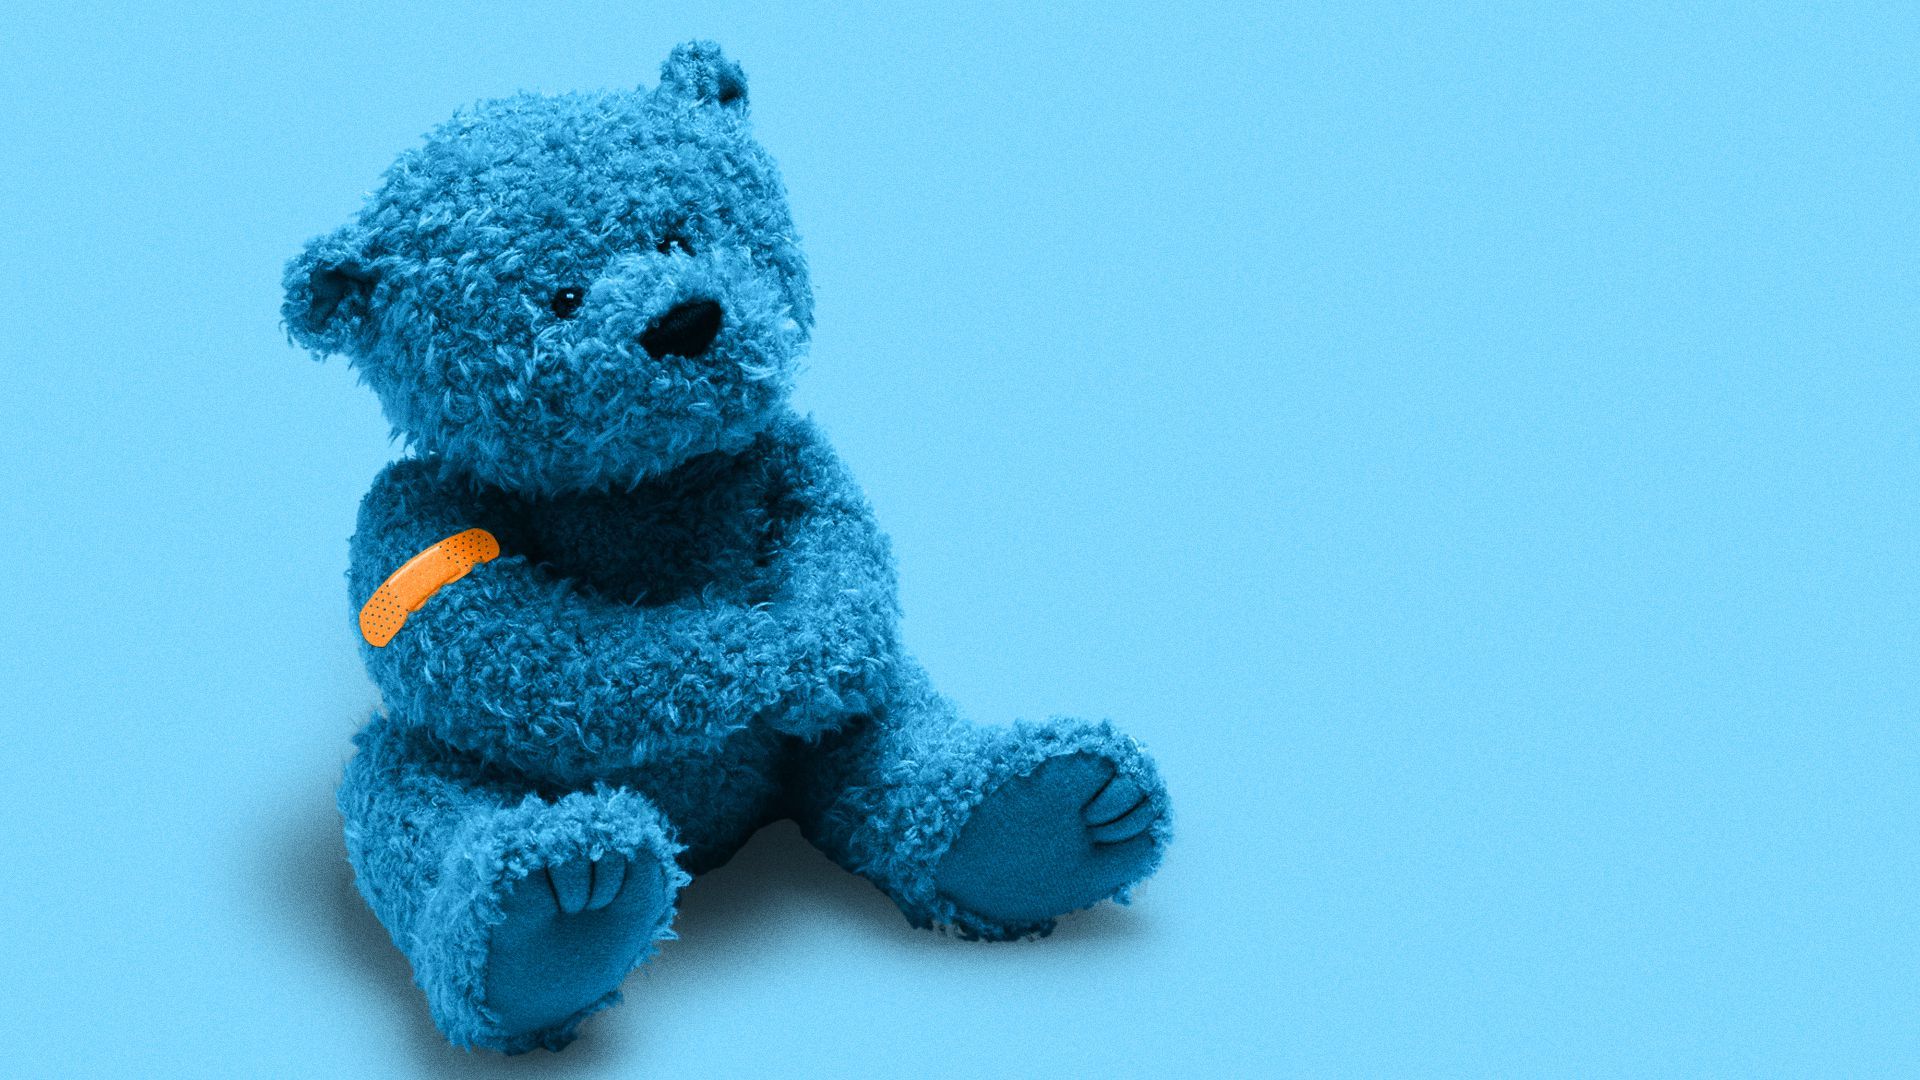 Blue teddy bear with orange band-aid on its arm. 